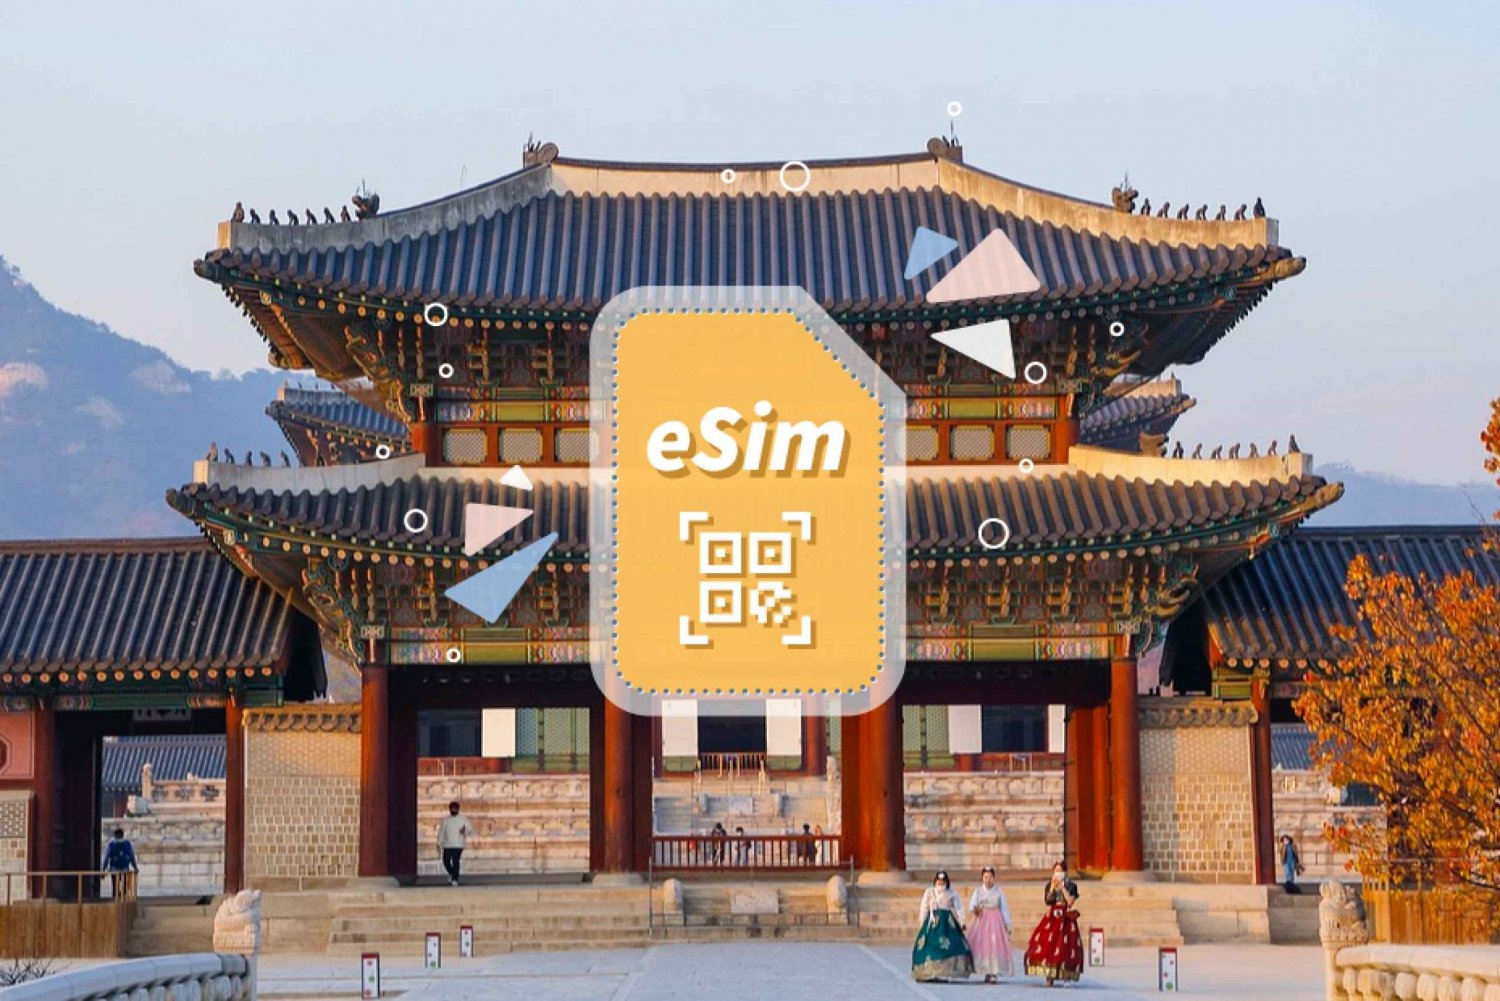 Asia: Plan de datos eSIM para 8 regiones asiáticas